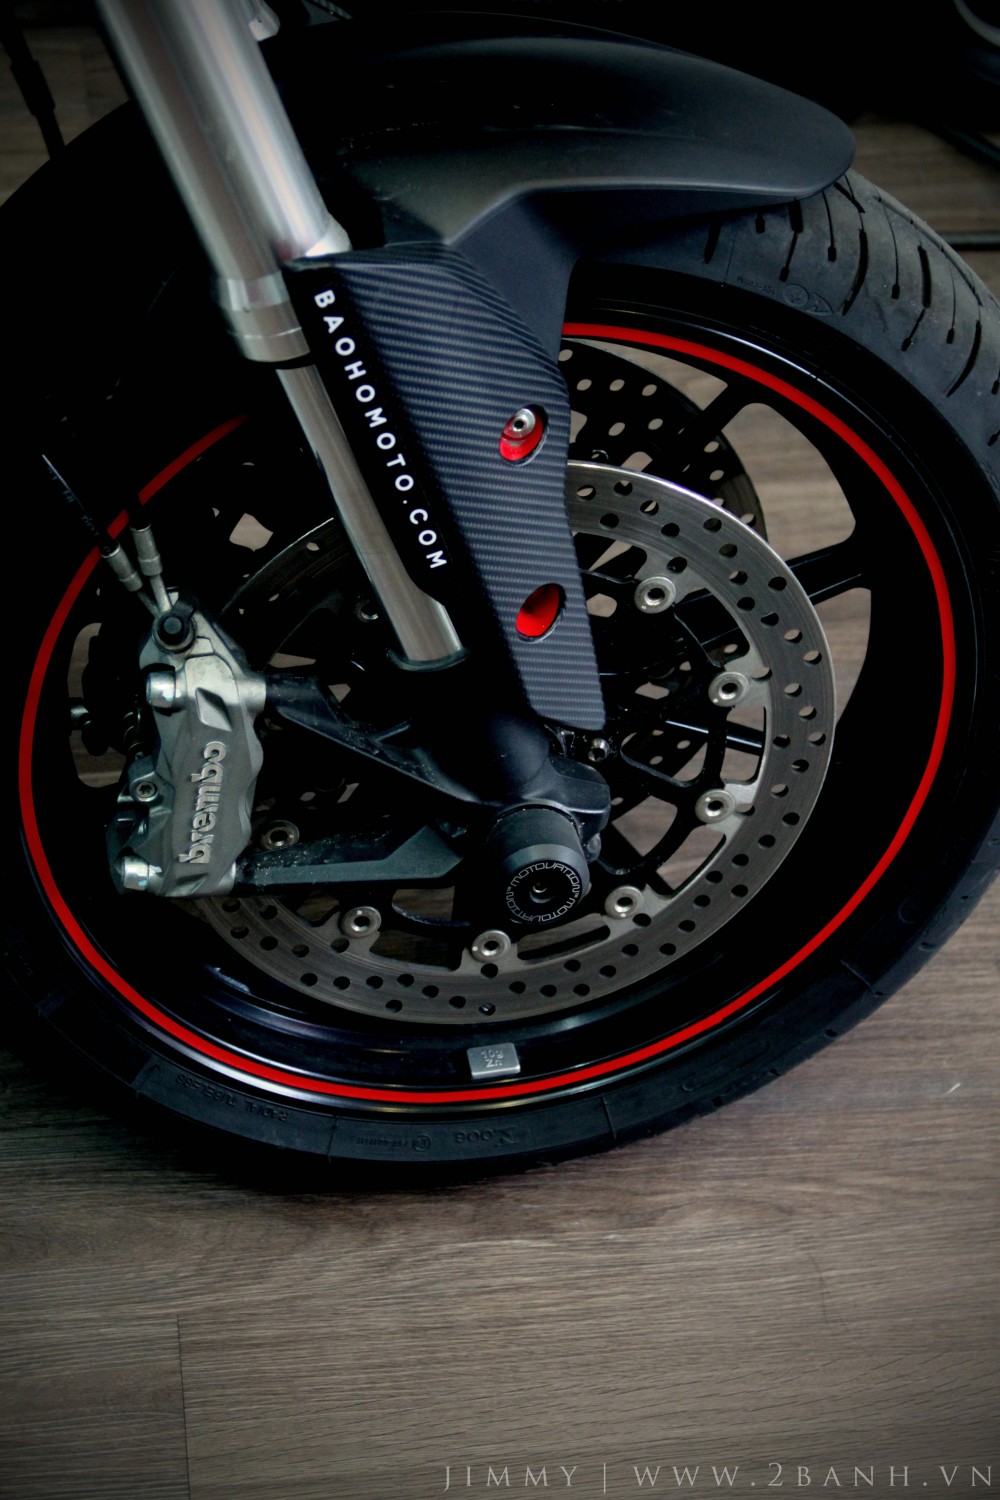 Ducati Hyperstrada lung linh khoe sac - 10